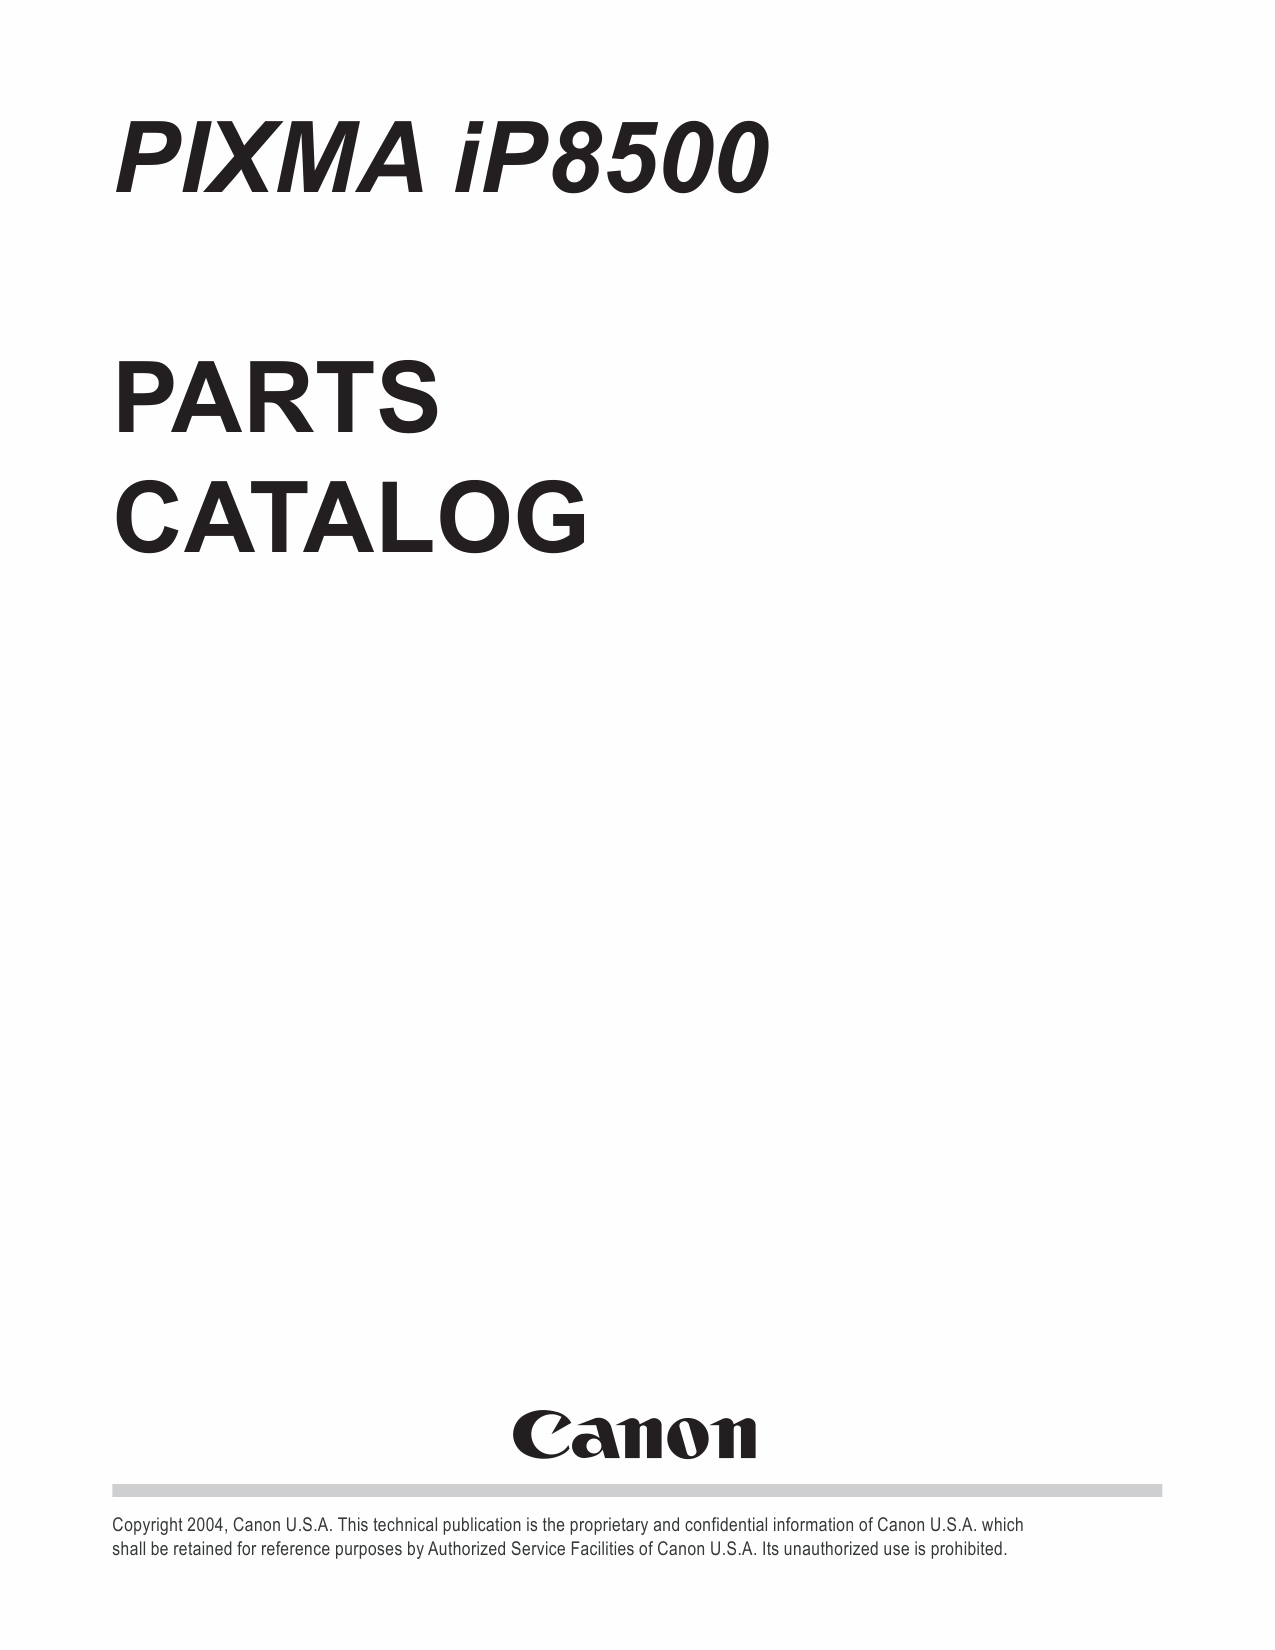 Canon PIXMA iP8500 Parts Catalog-1